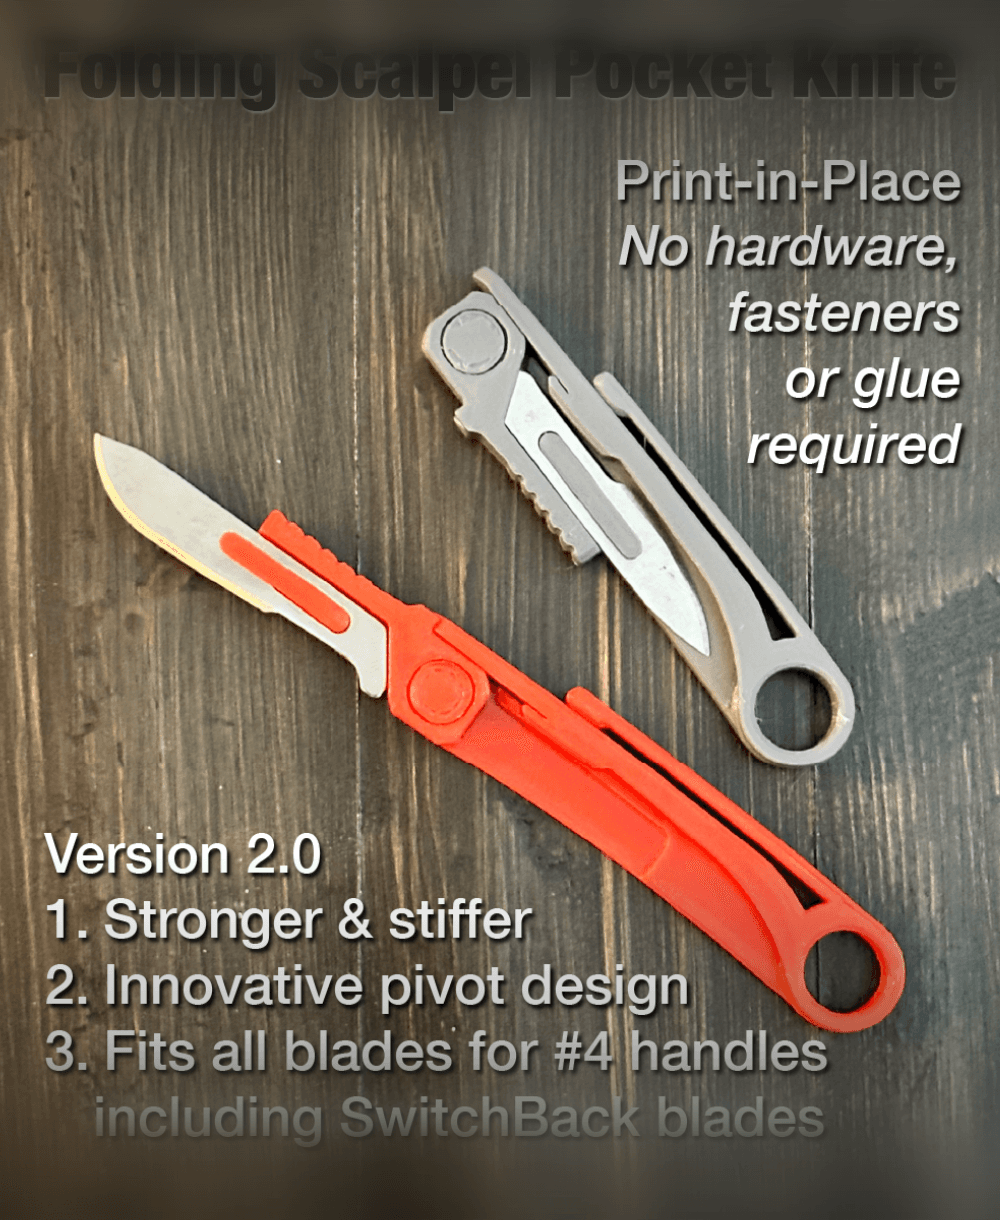 Folding Scalpel Pocket Knife version 2.0 3d model